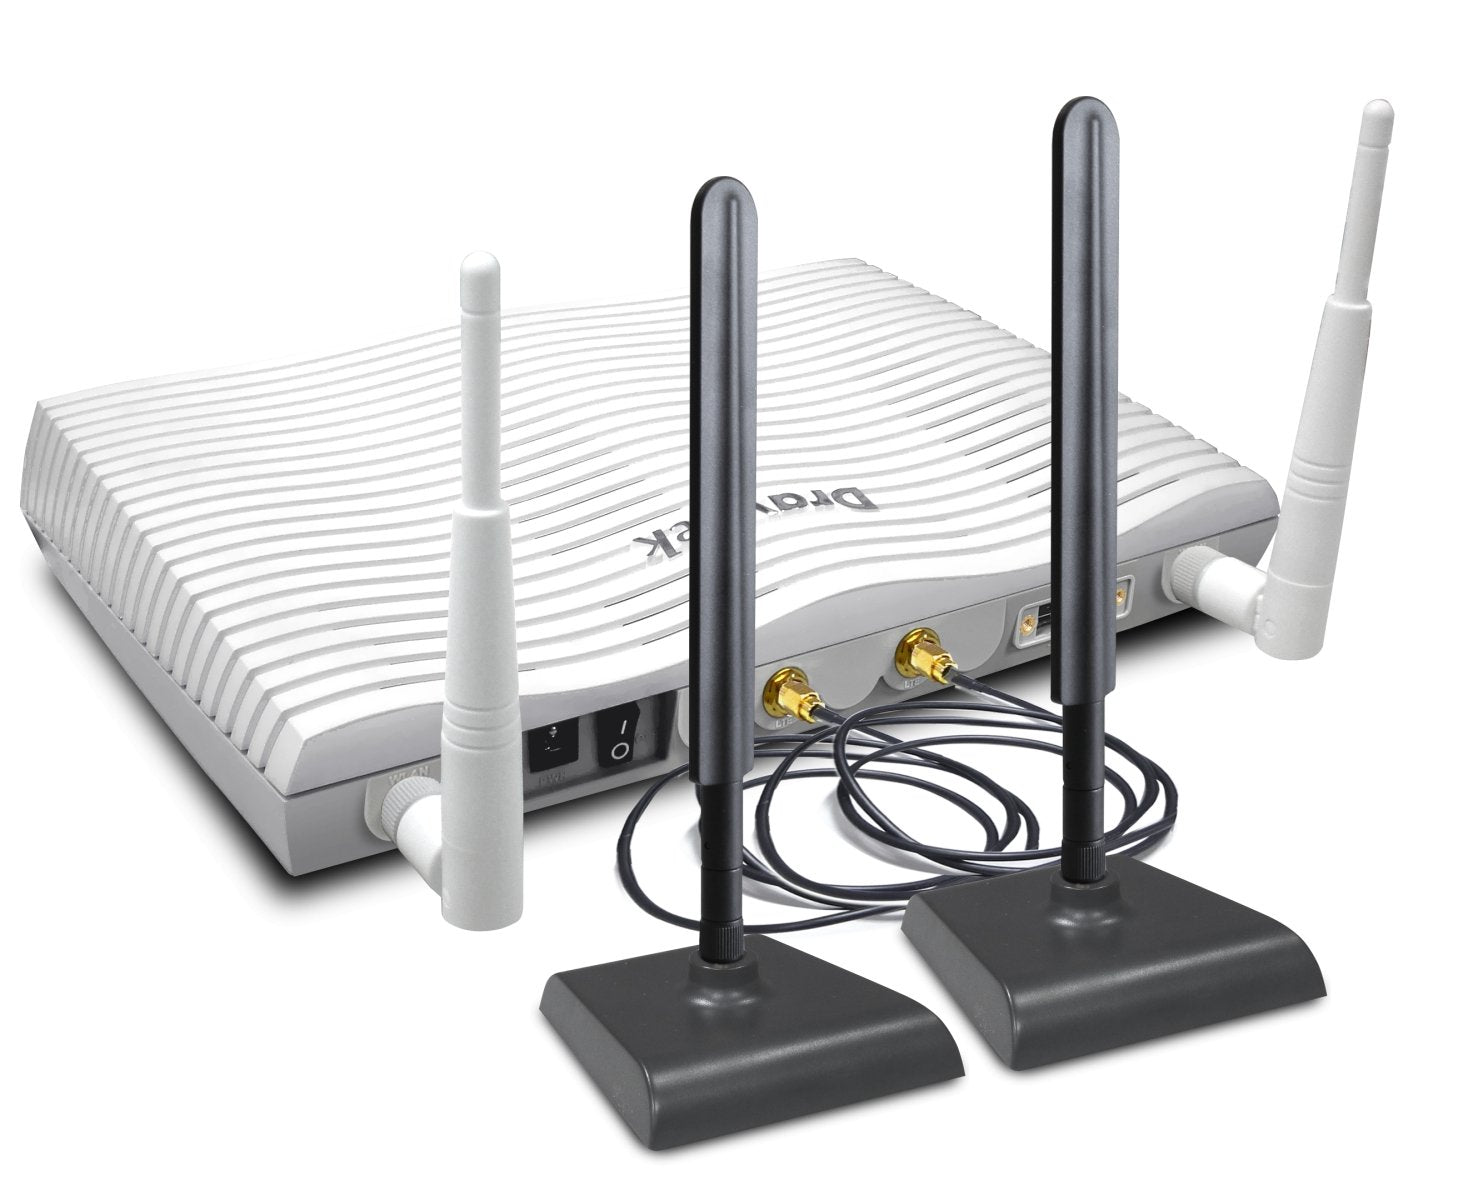 DrayTek 2865LAC Multi-WAN Firewall VPN Router AC1300 4G/LTE Modem Rear View